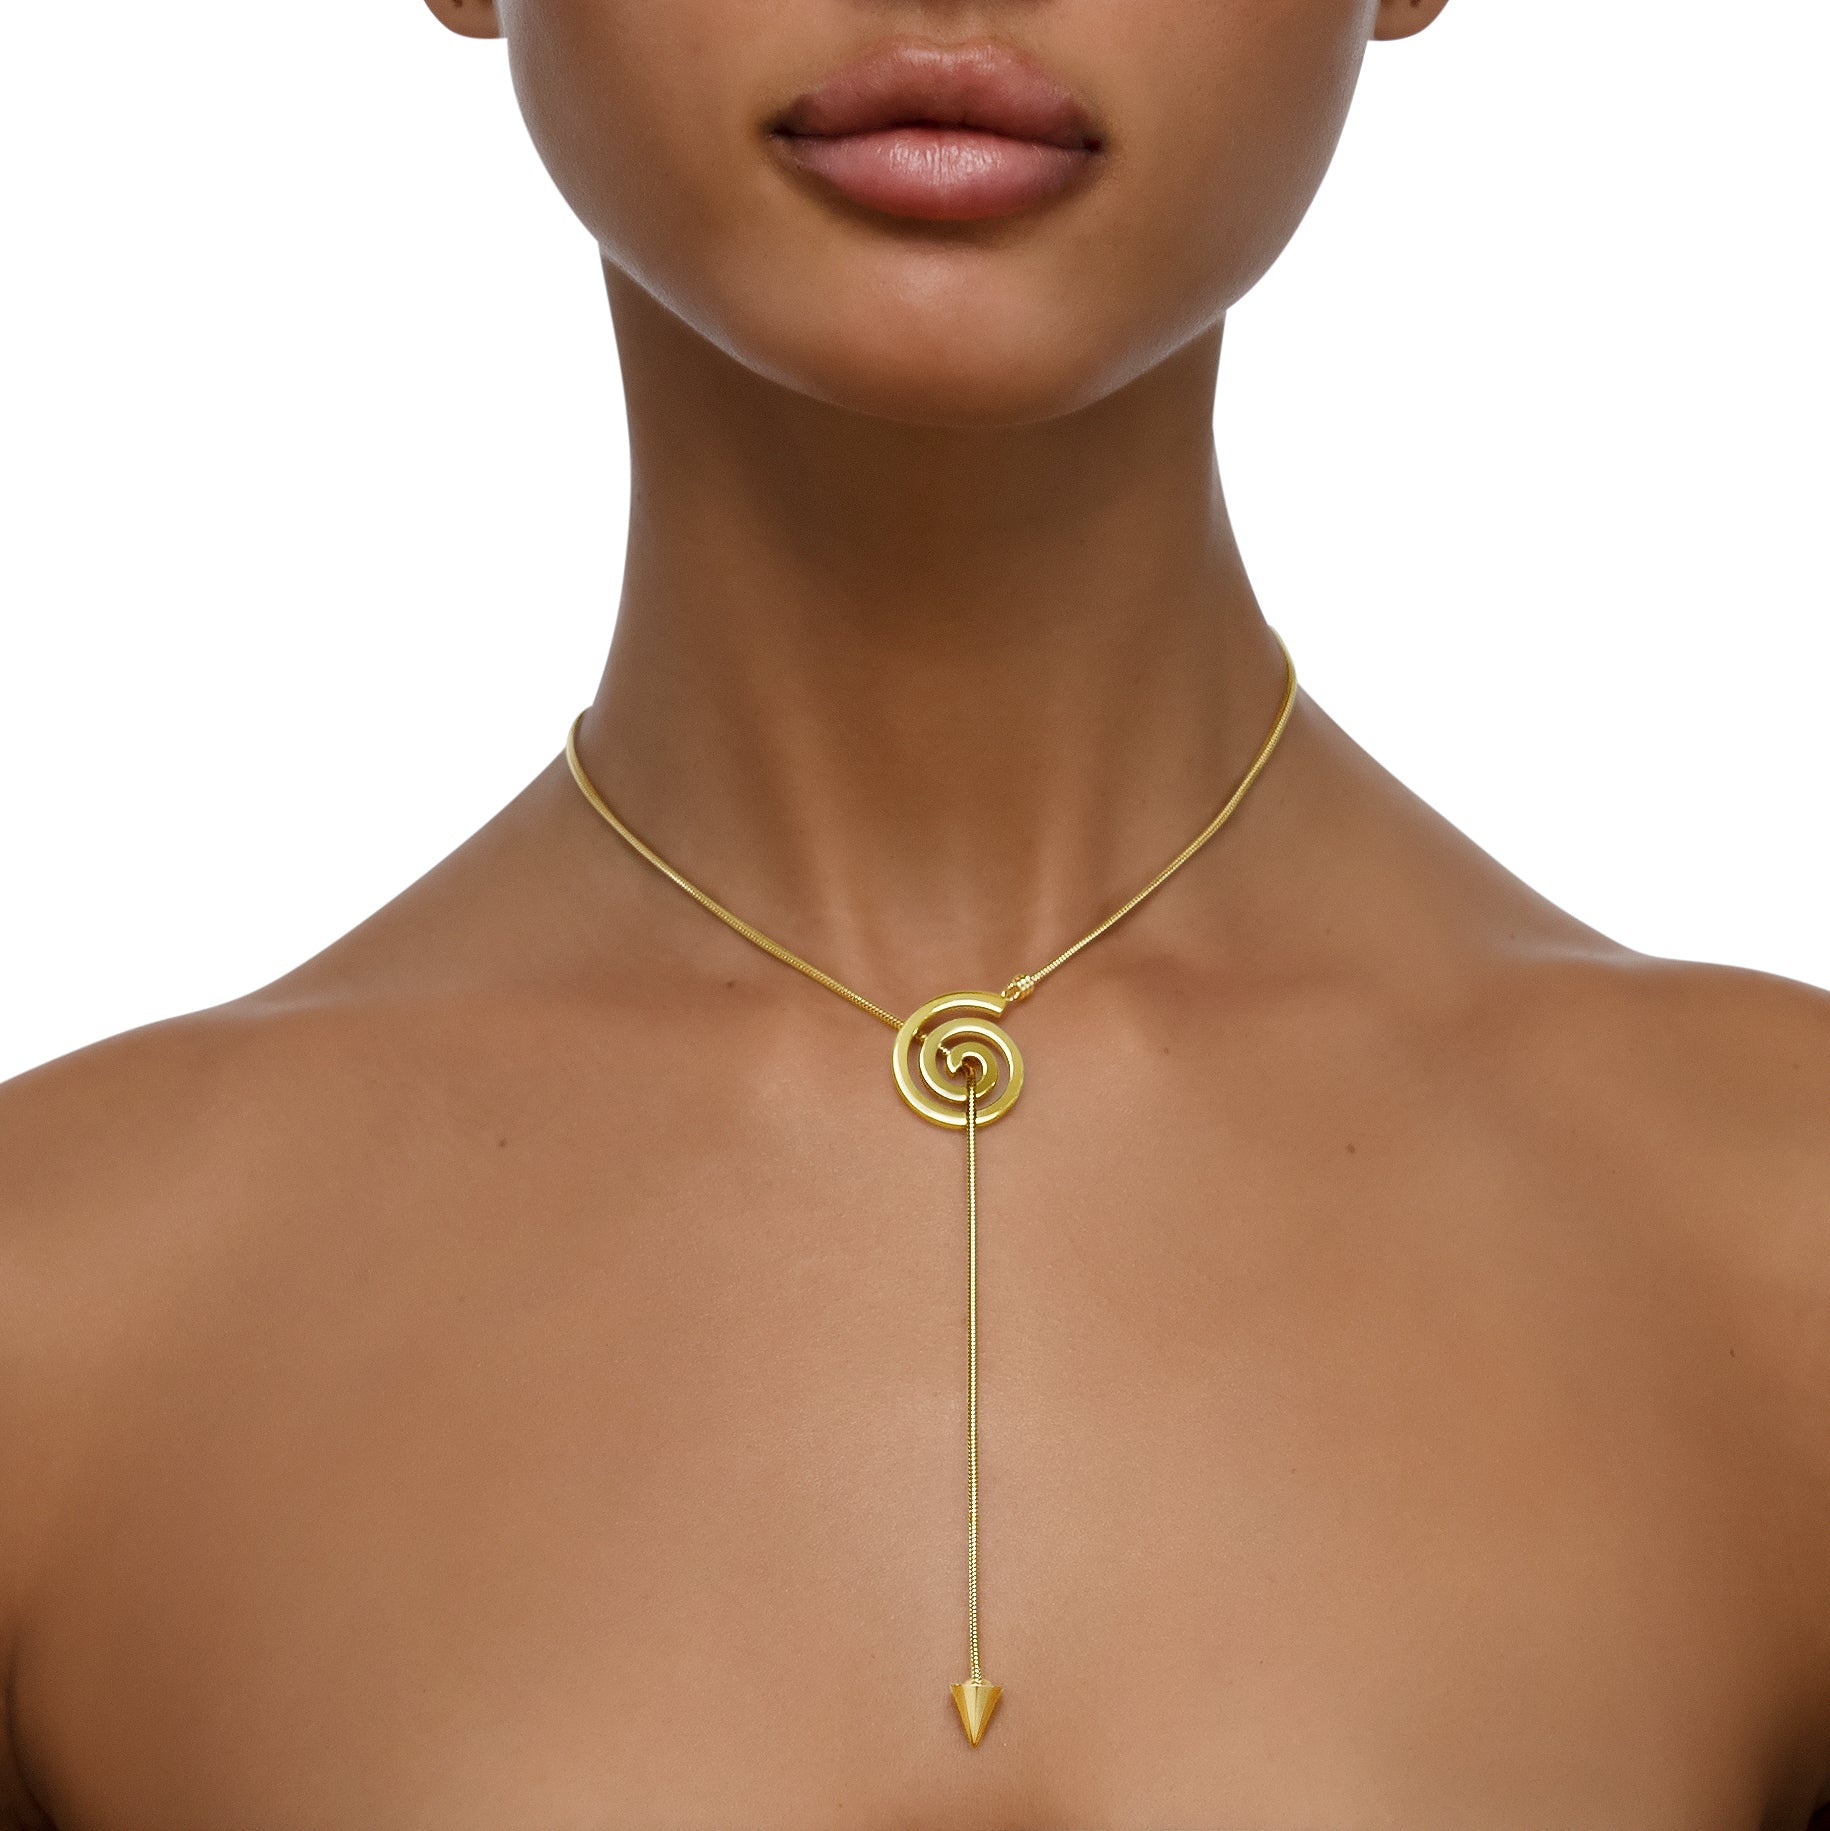 Ingenious Gold lariat necklace with hanging stones - Ingenious from  Ingenious Jewellery UK